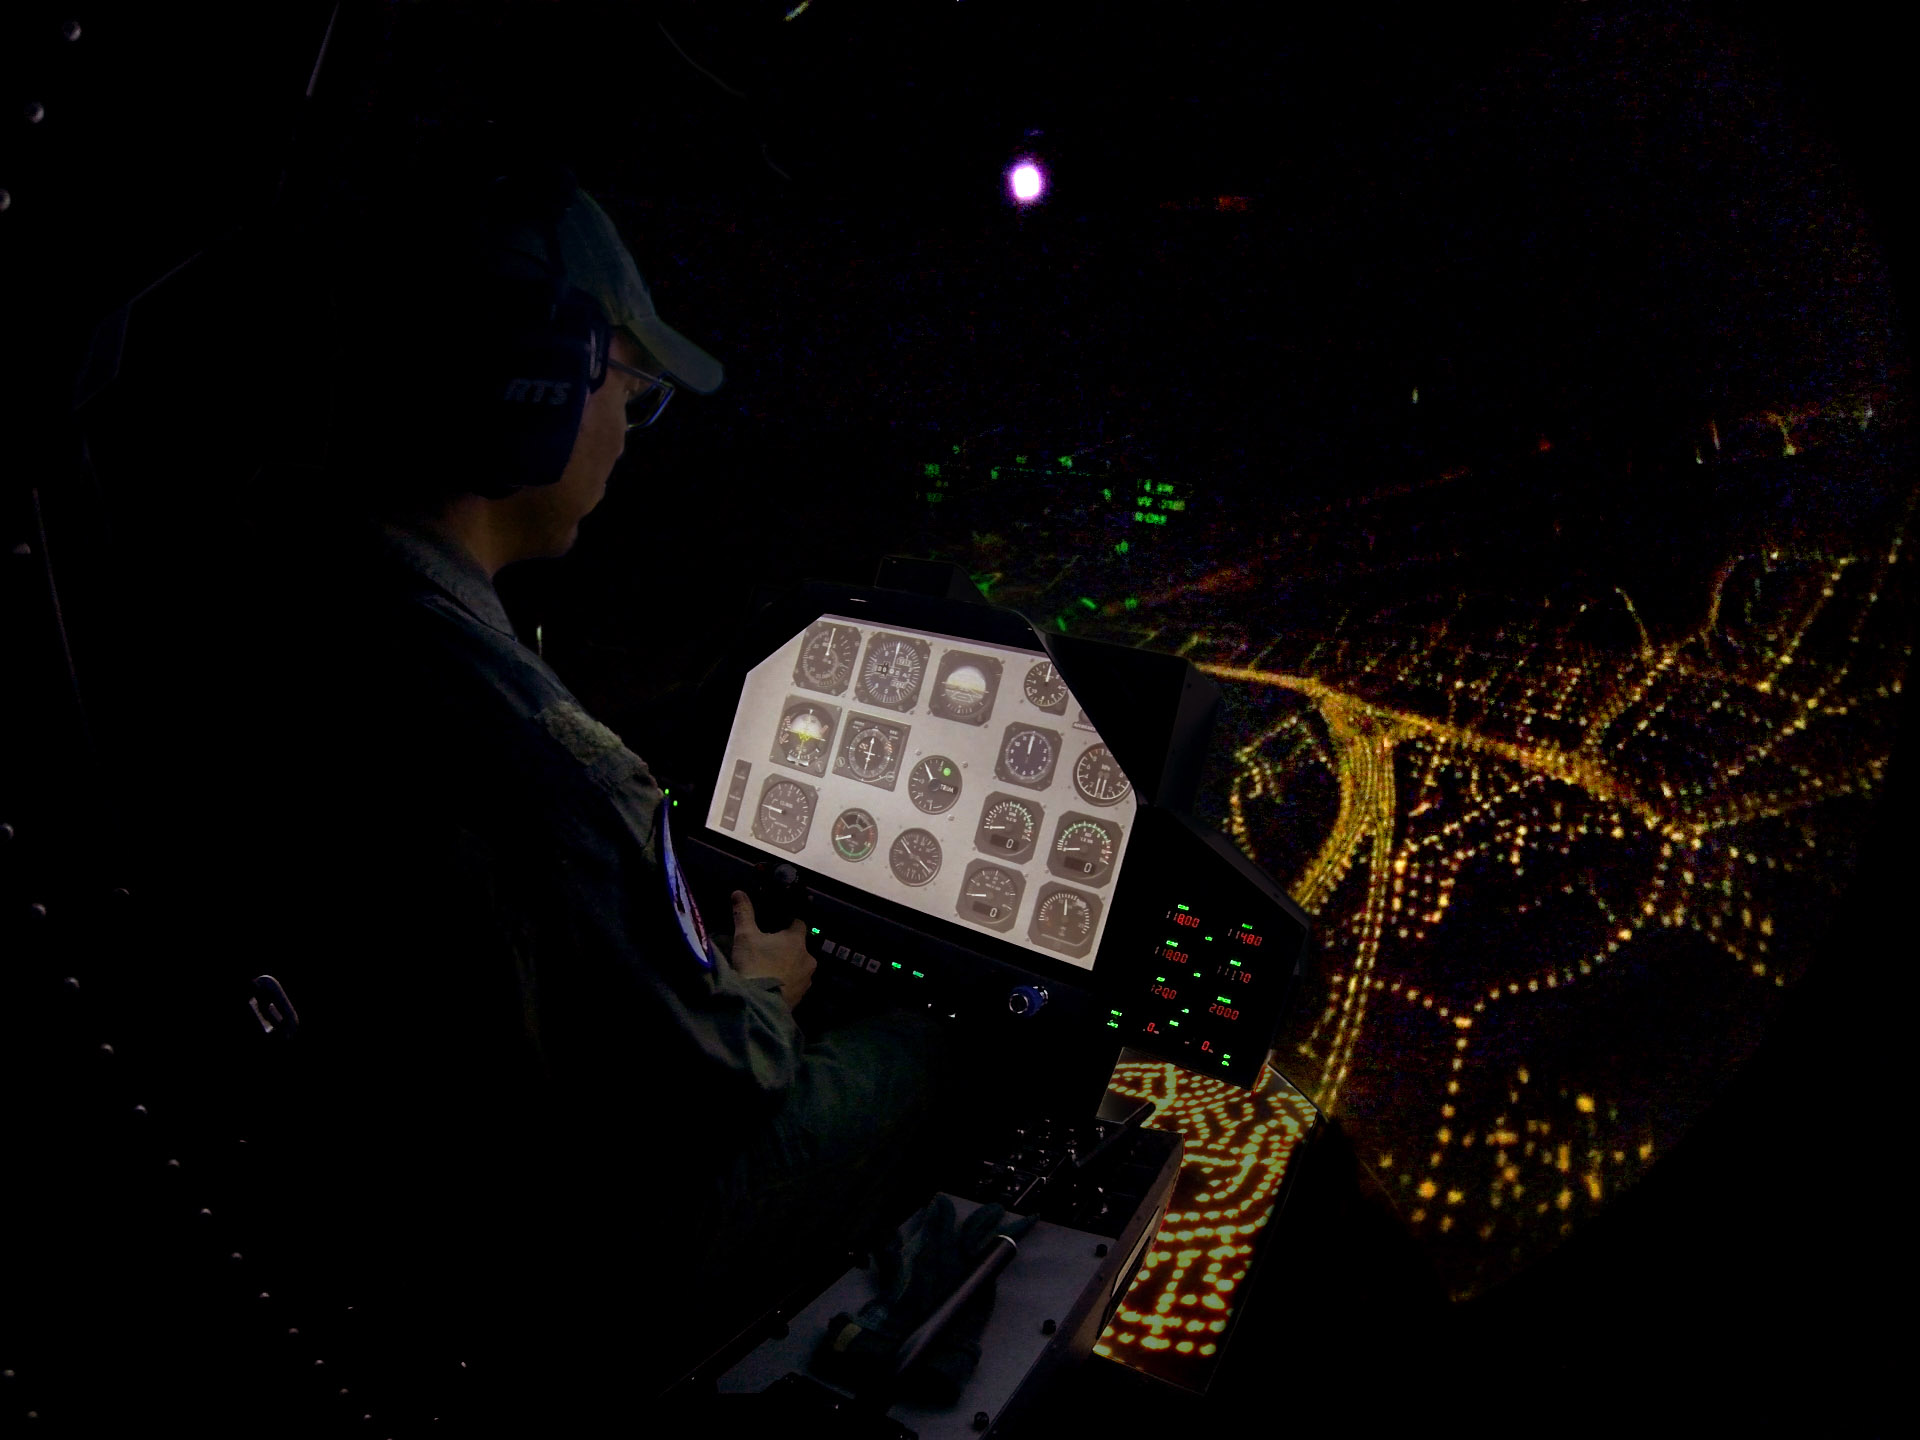 GYRO IPT-II Night Vision Compatible Spatial Disorientation Simulator